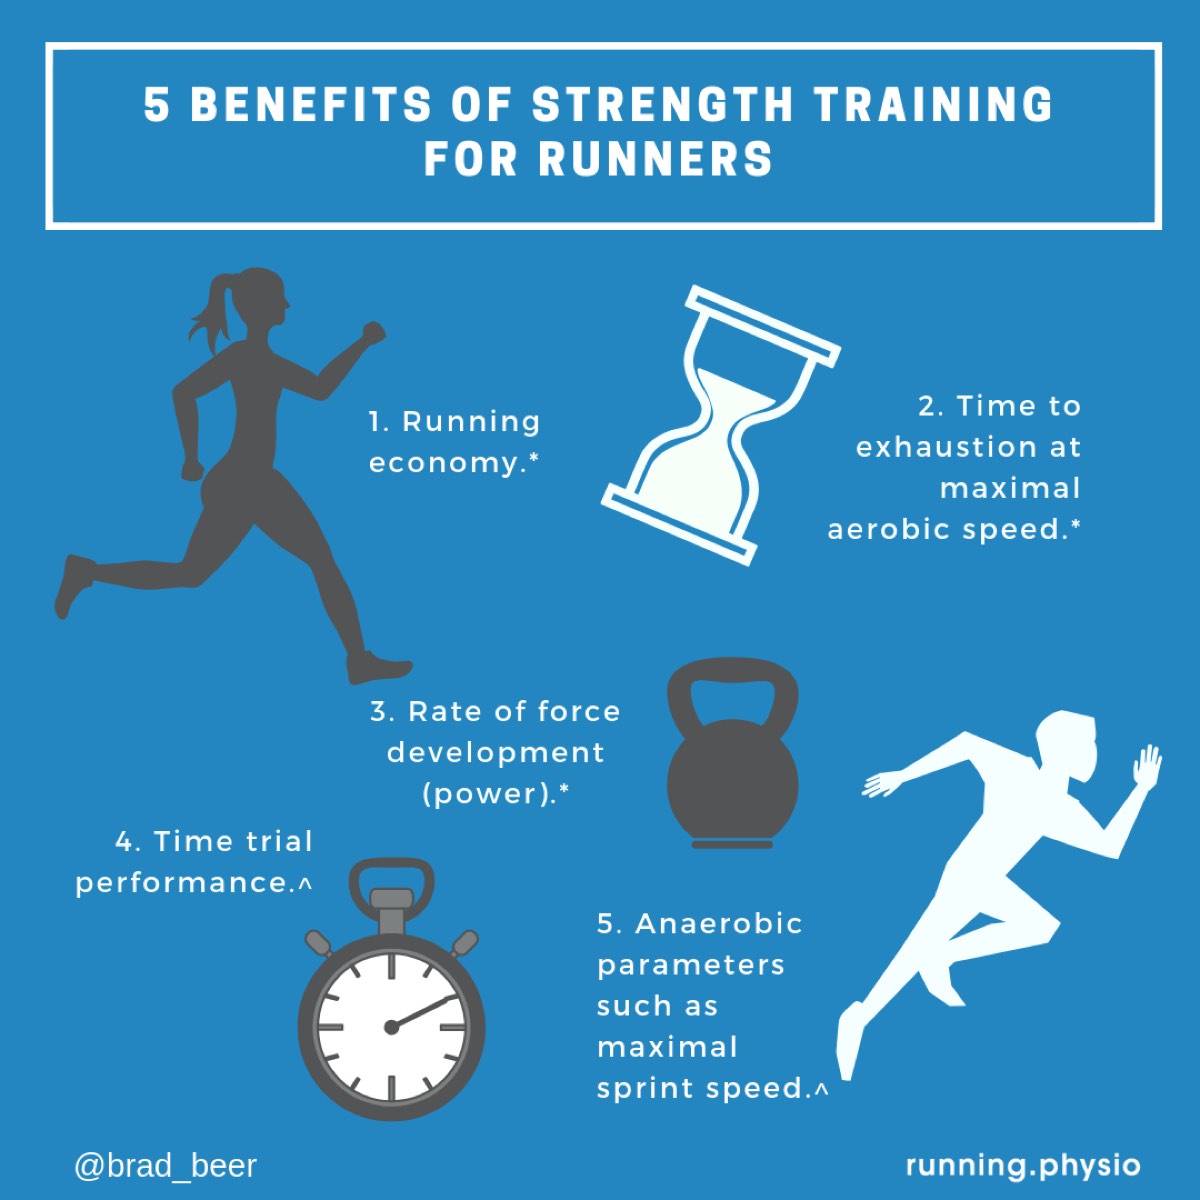 Endurance and strength training